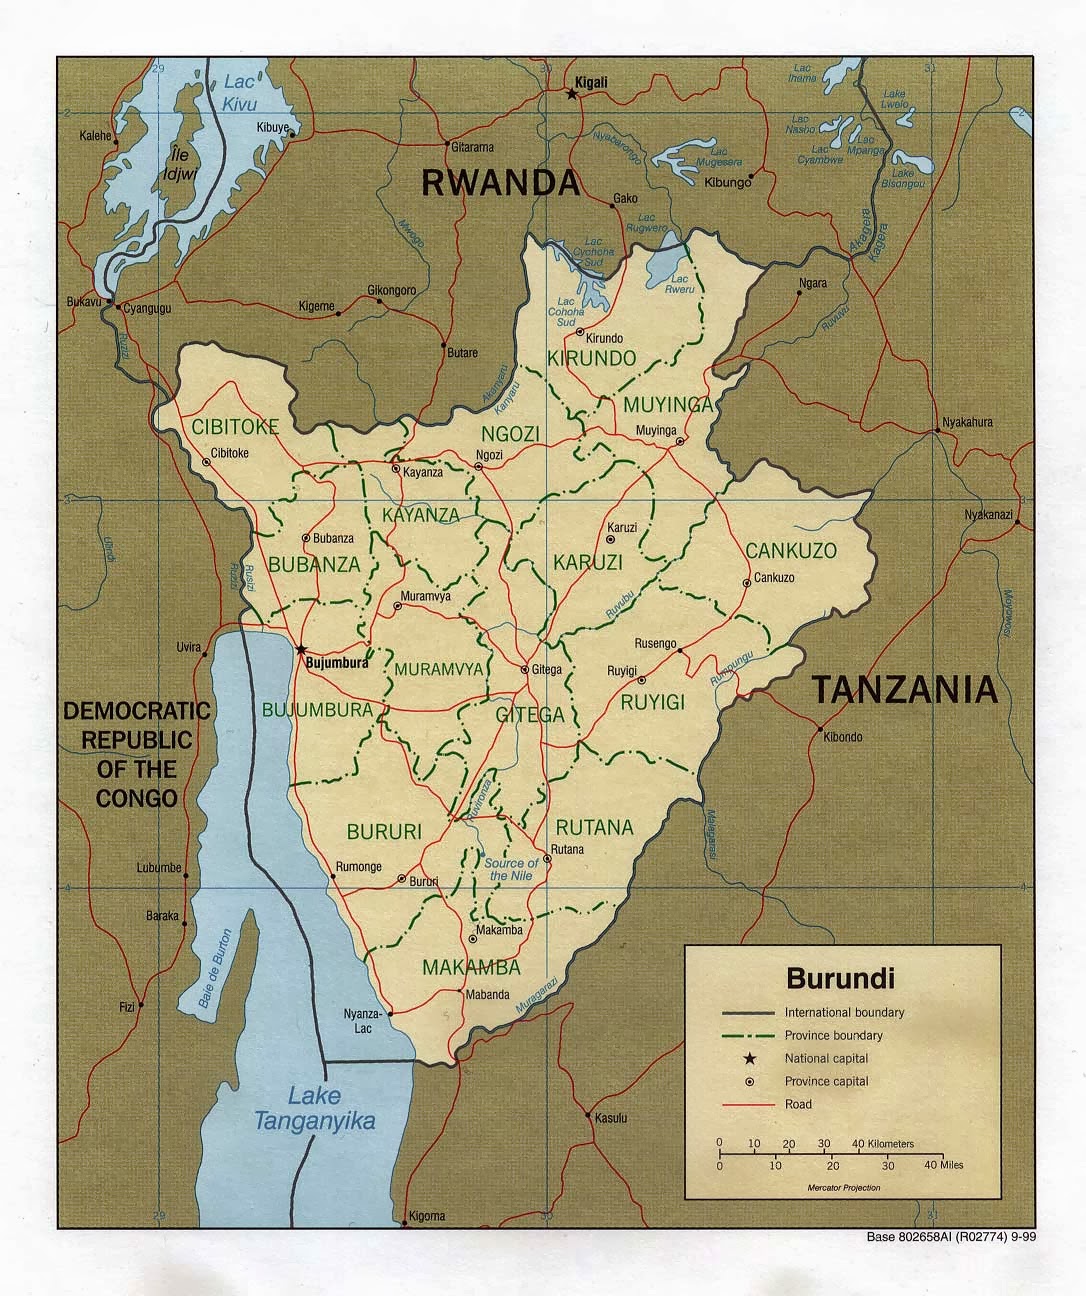 World Military and Police Forces: Burundi